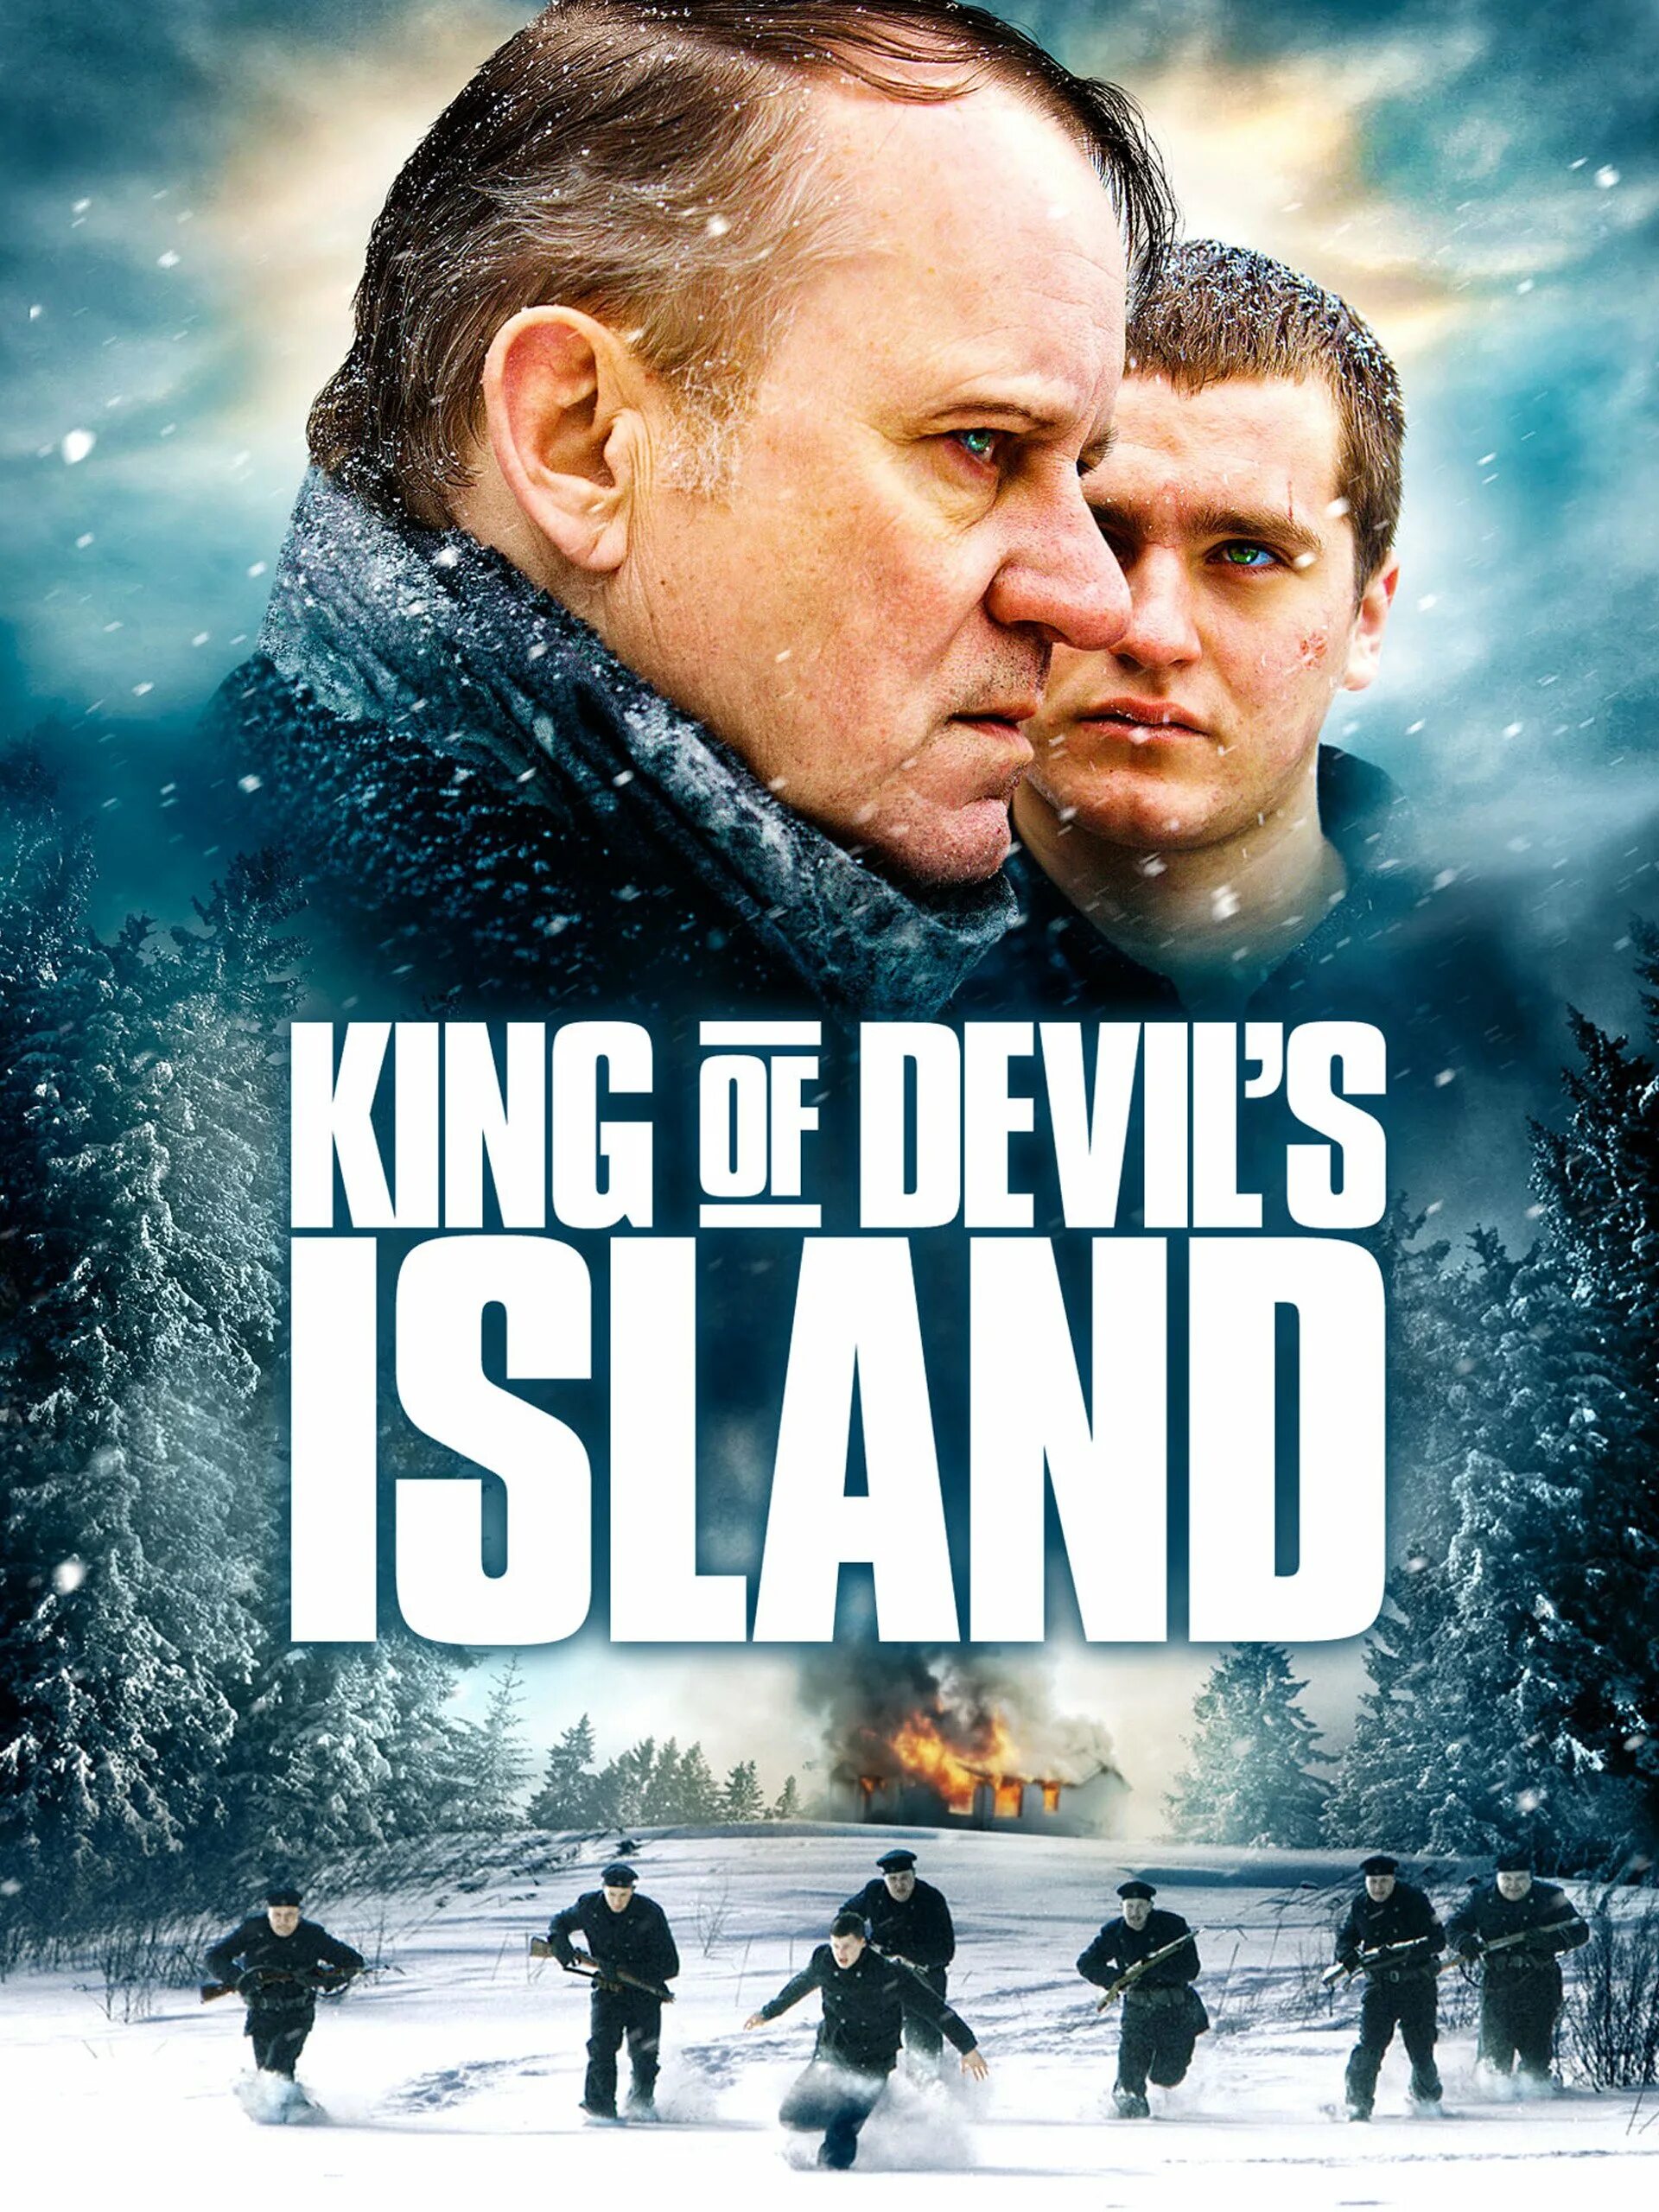 Король чёртова острова (2010). Король острова Бастой. Король острова дьявола (Kongen av Bastøy), 2010.